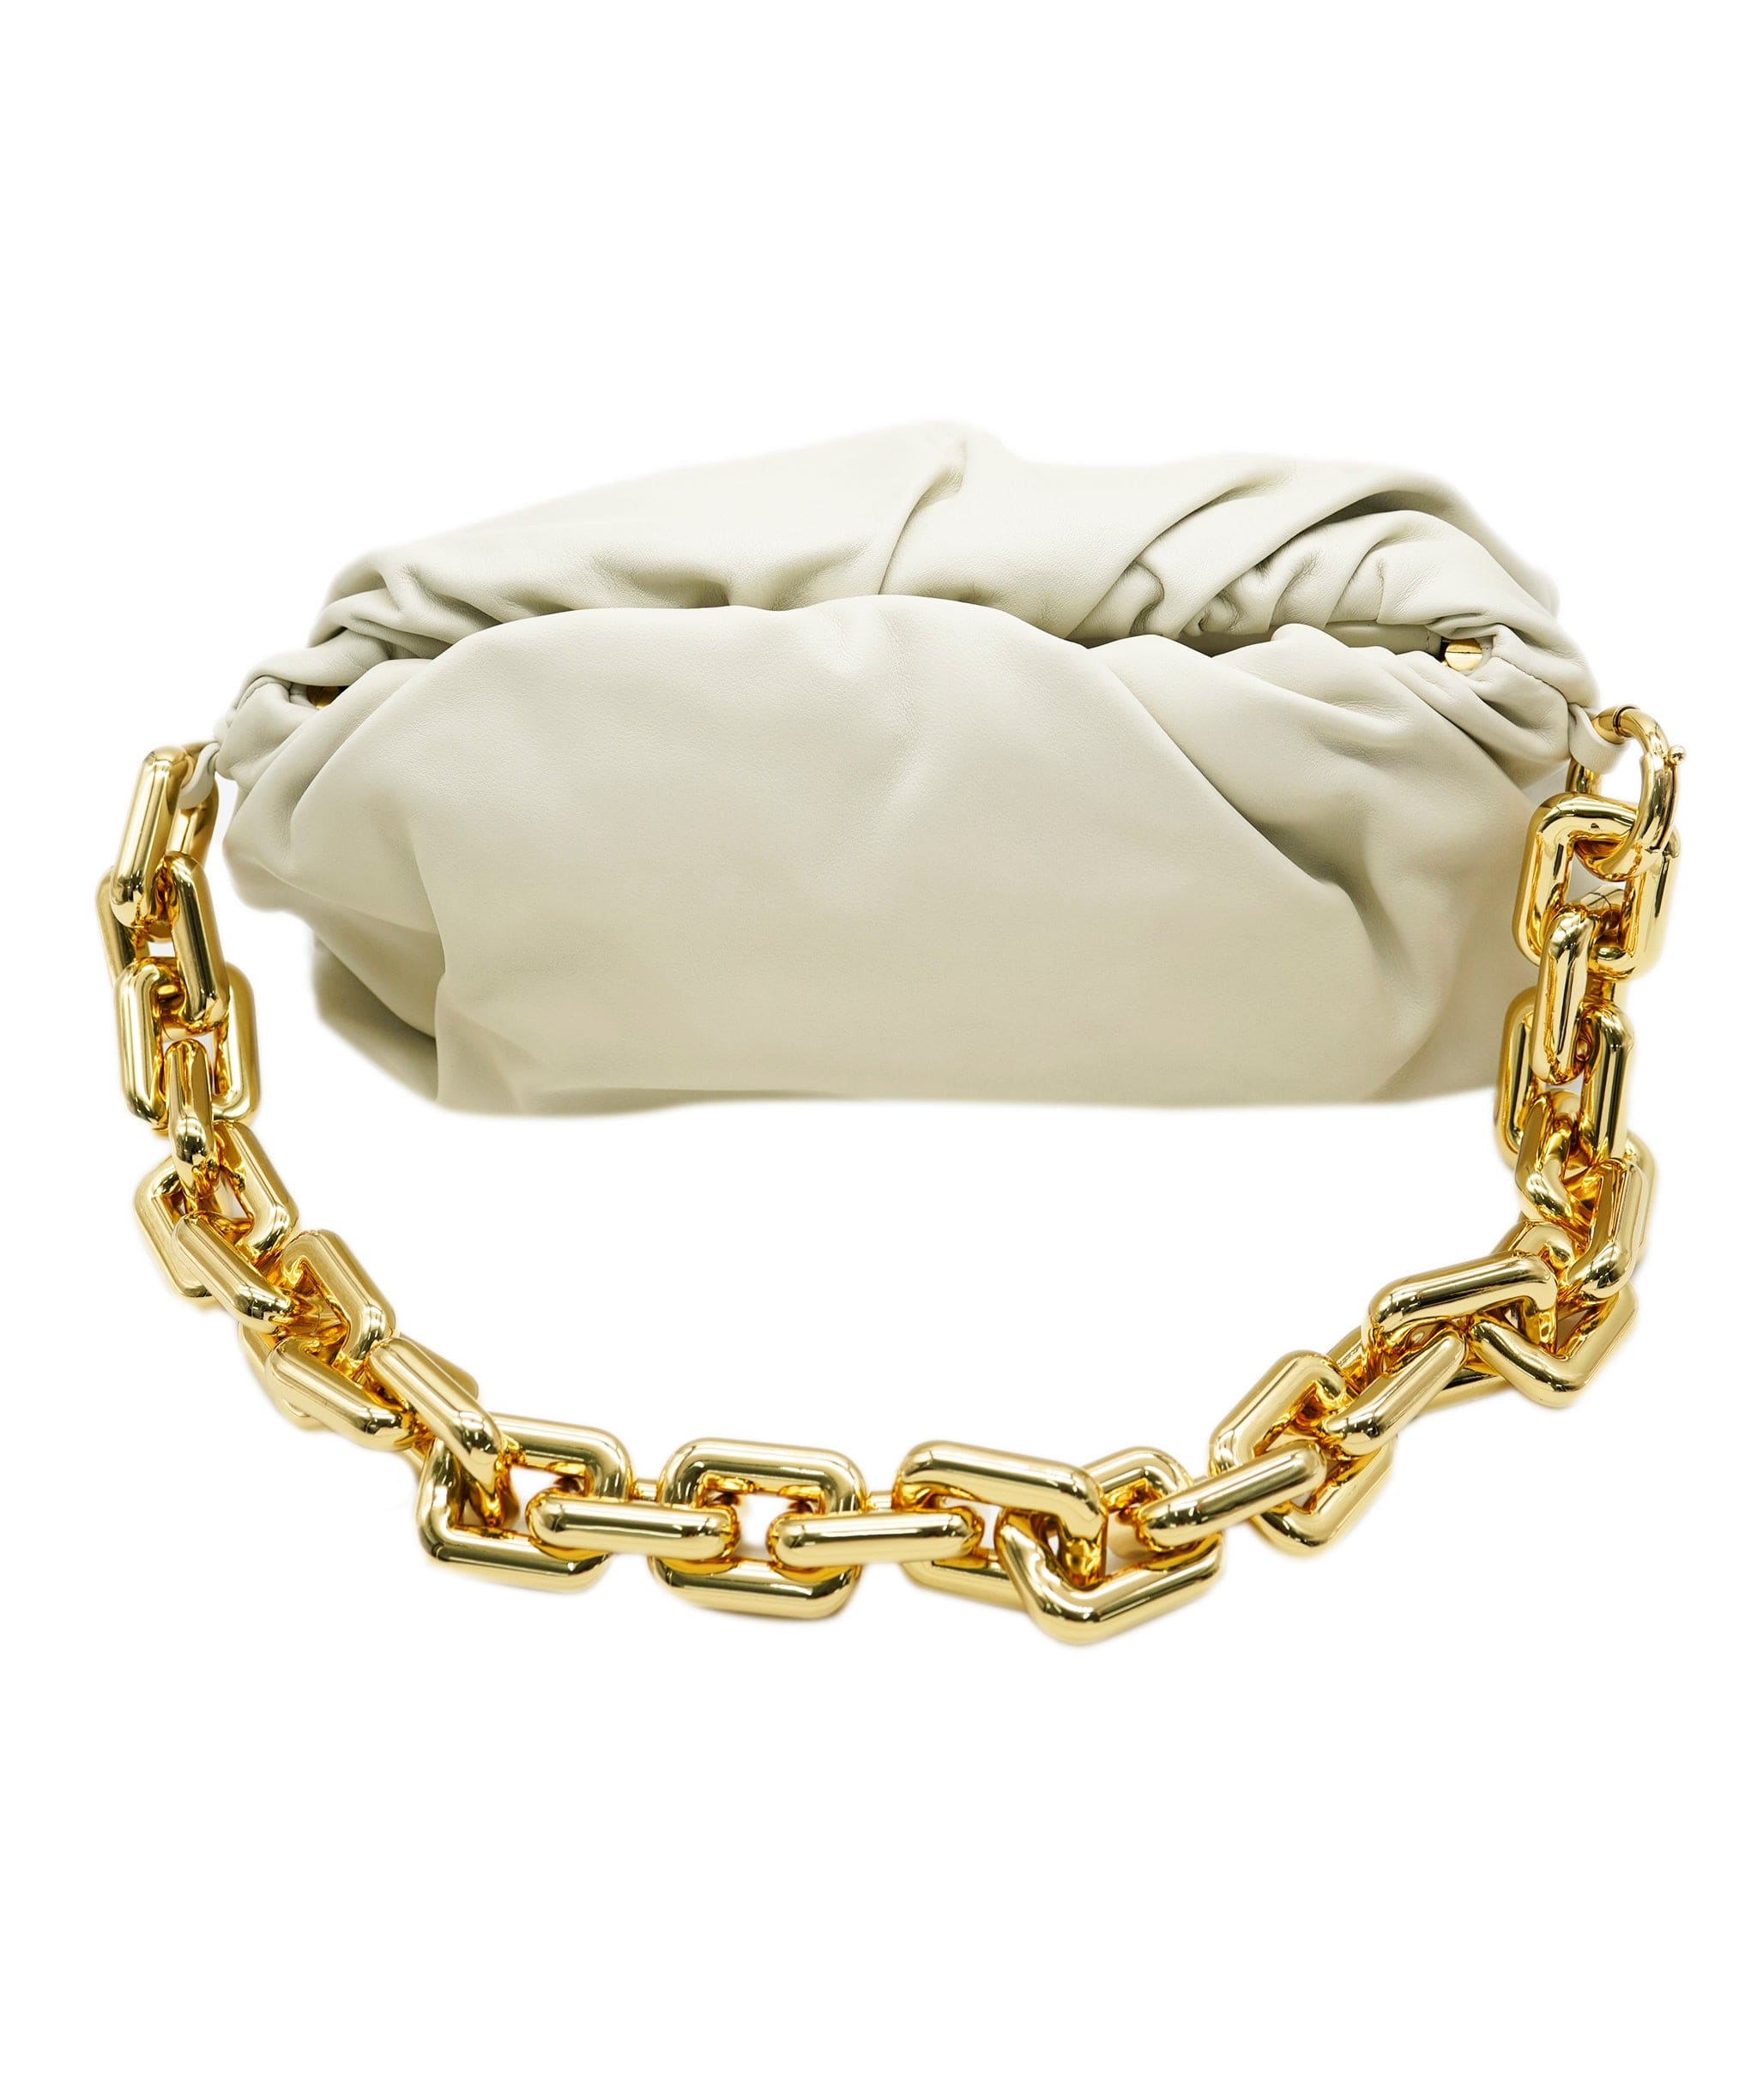 Bottega Bottega chain off white bag with GHW  - AJC0412